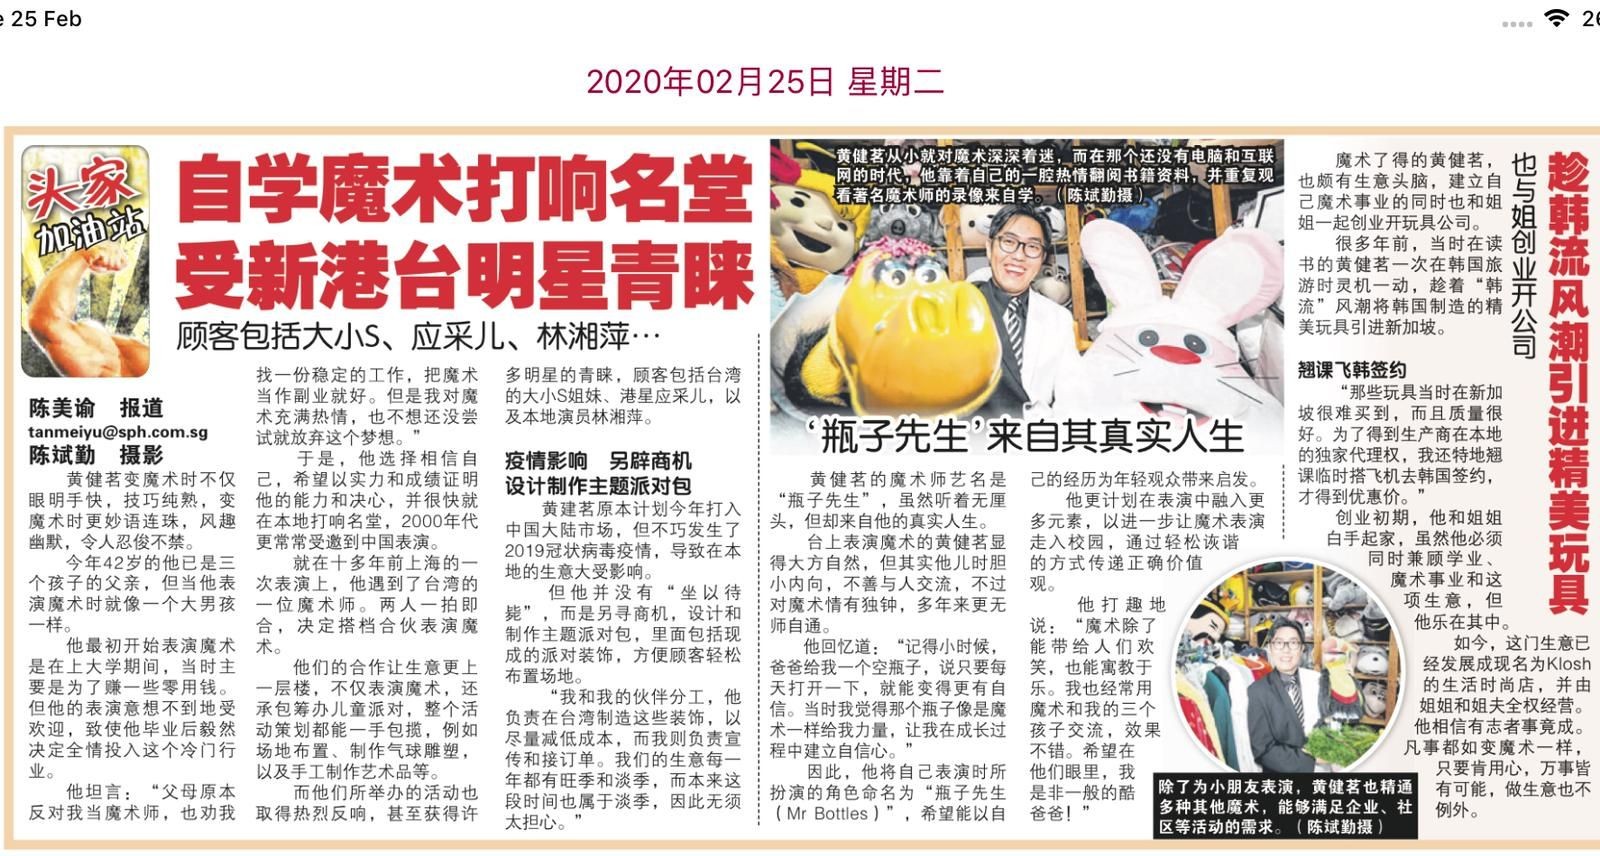 news article on lianhezaobao